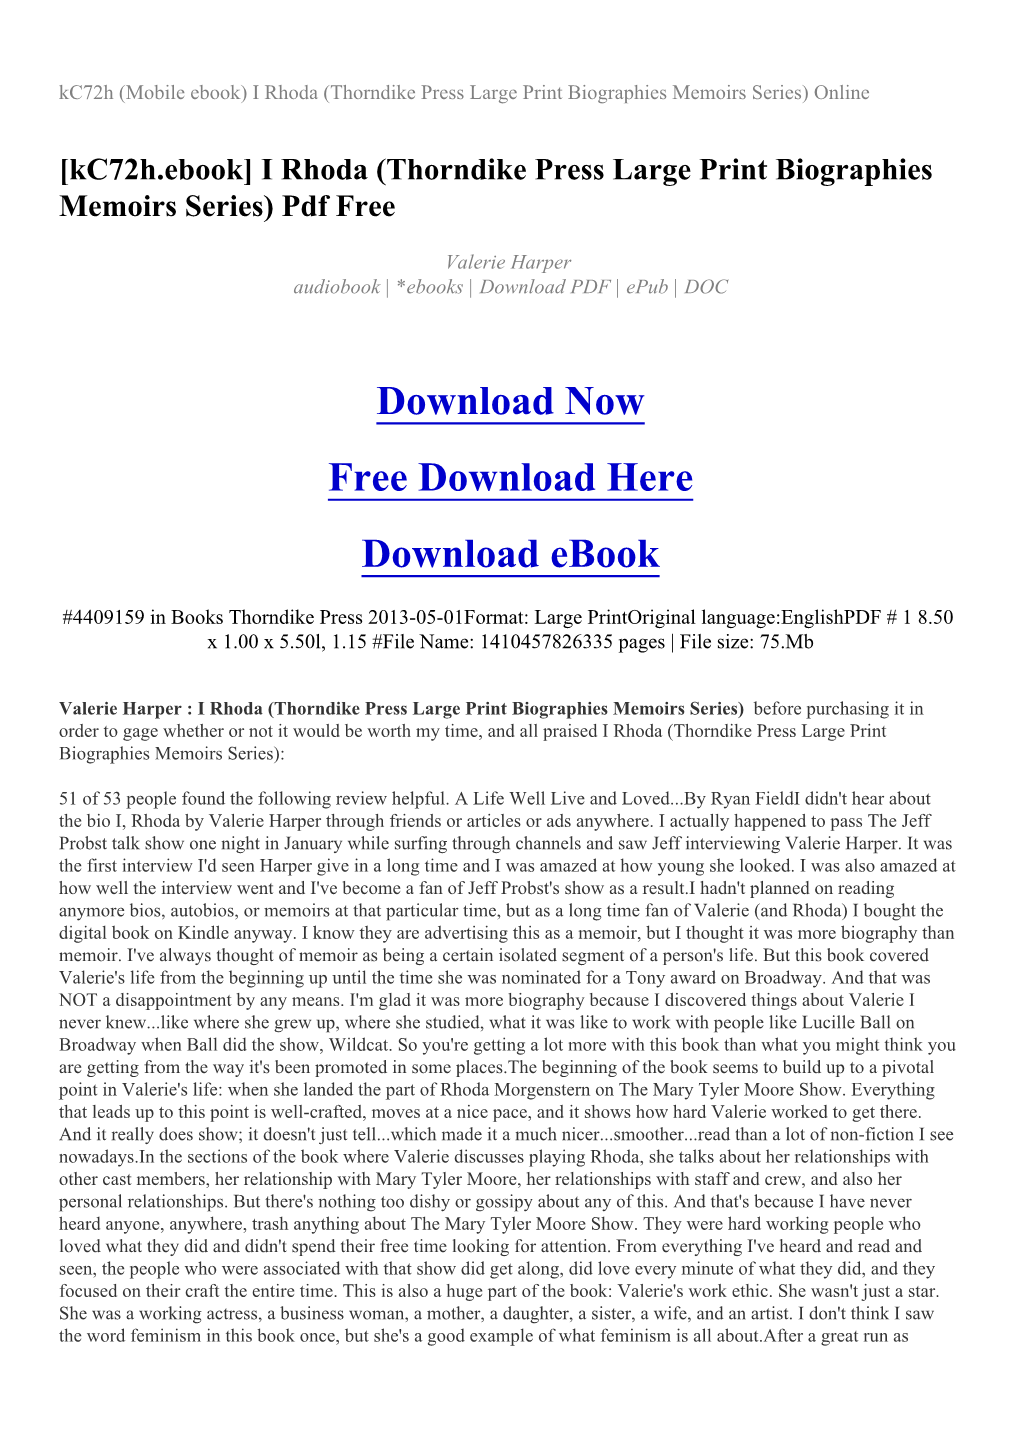 I Rhoda (Thorndike Press Large Print Biographies Memoirs Series) Online